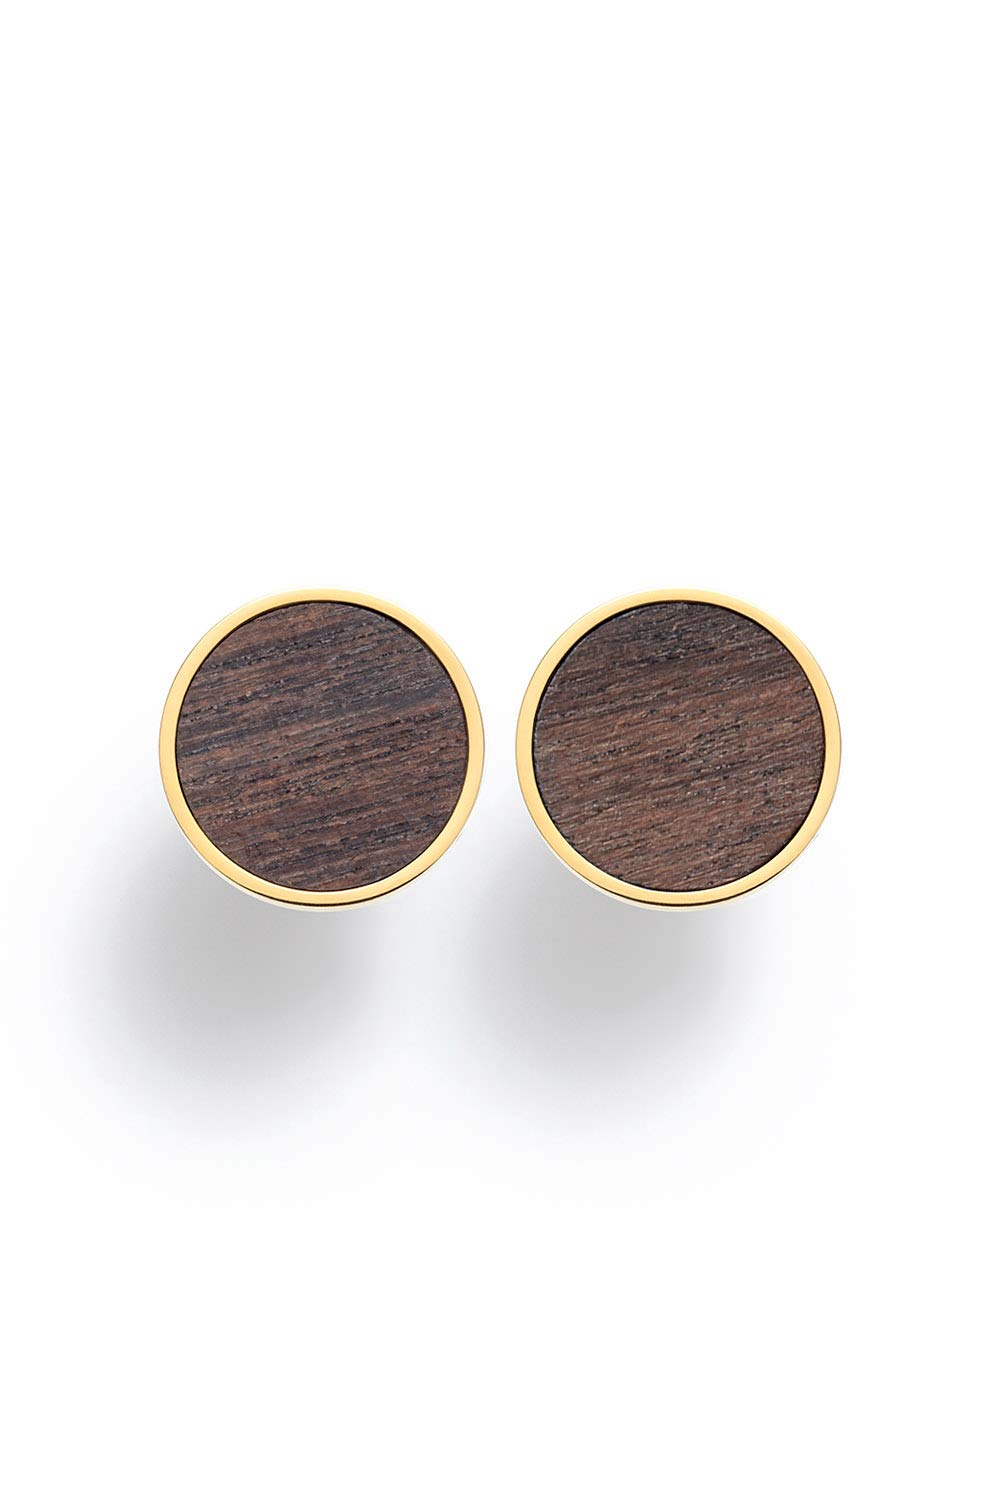 KERBHOLZ Holzschmuck – Geometrics Collection Circle Earring, Damen Ohrring rund, kleine Ohrstecker mit Kreis aus Naturholz, gold, Ø 8mm